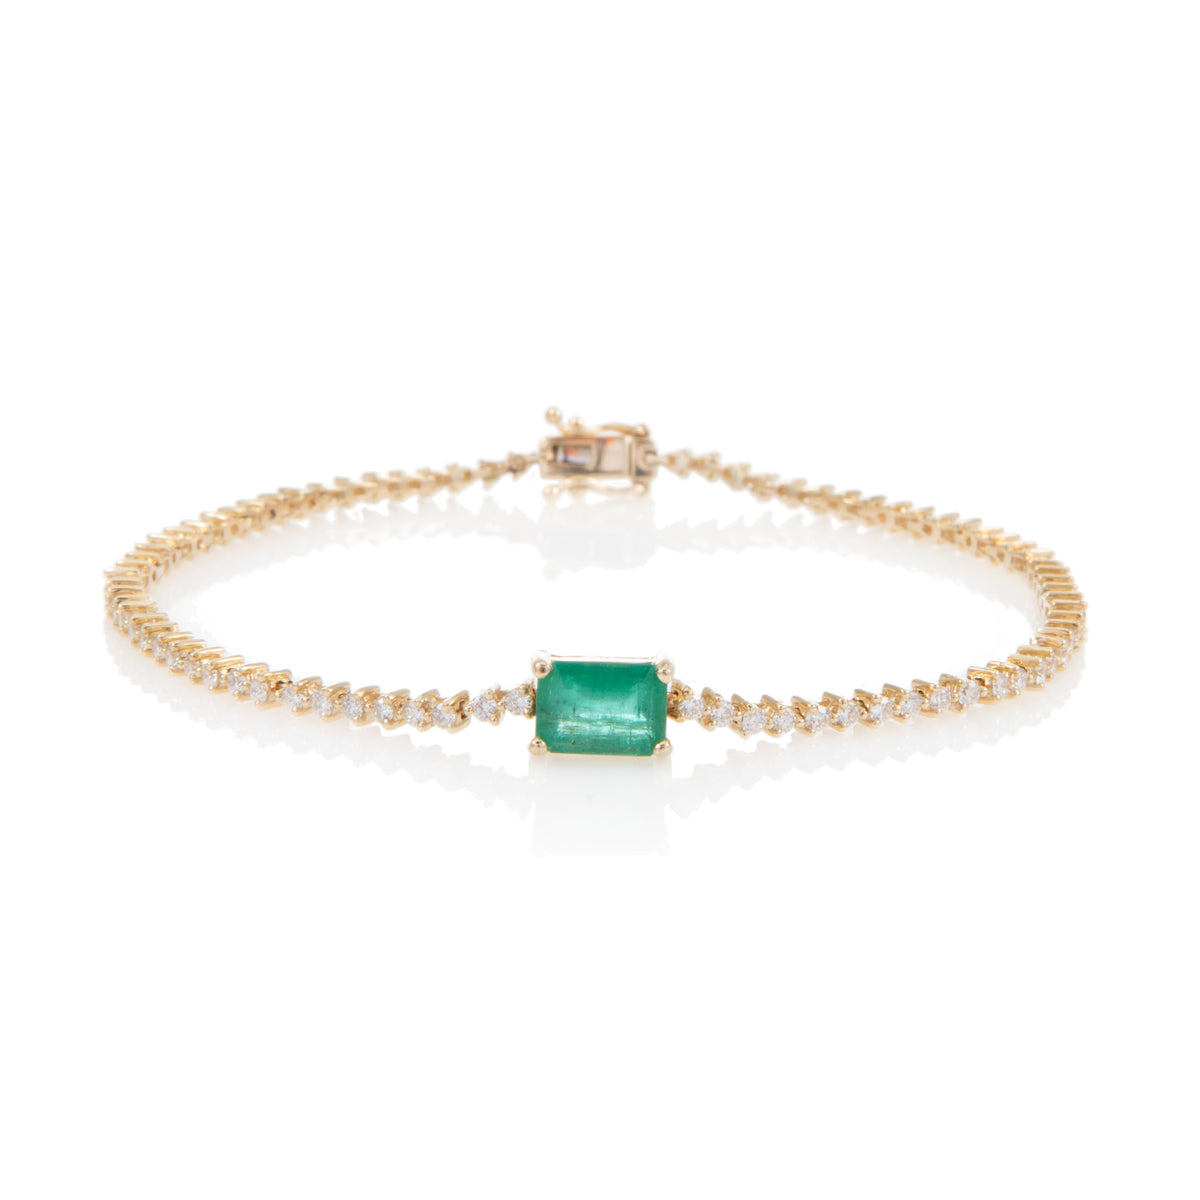 Emerald Cut Emerald and Diamond Tennis Bracelet